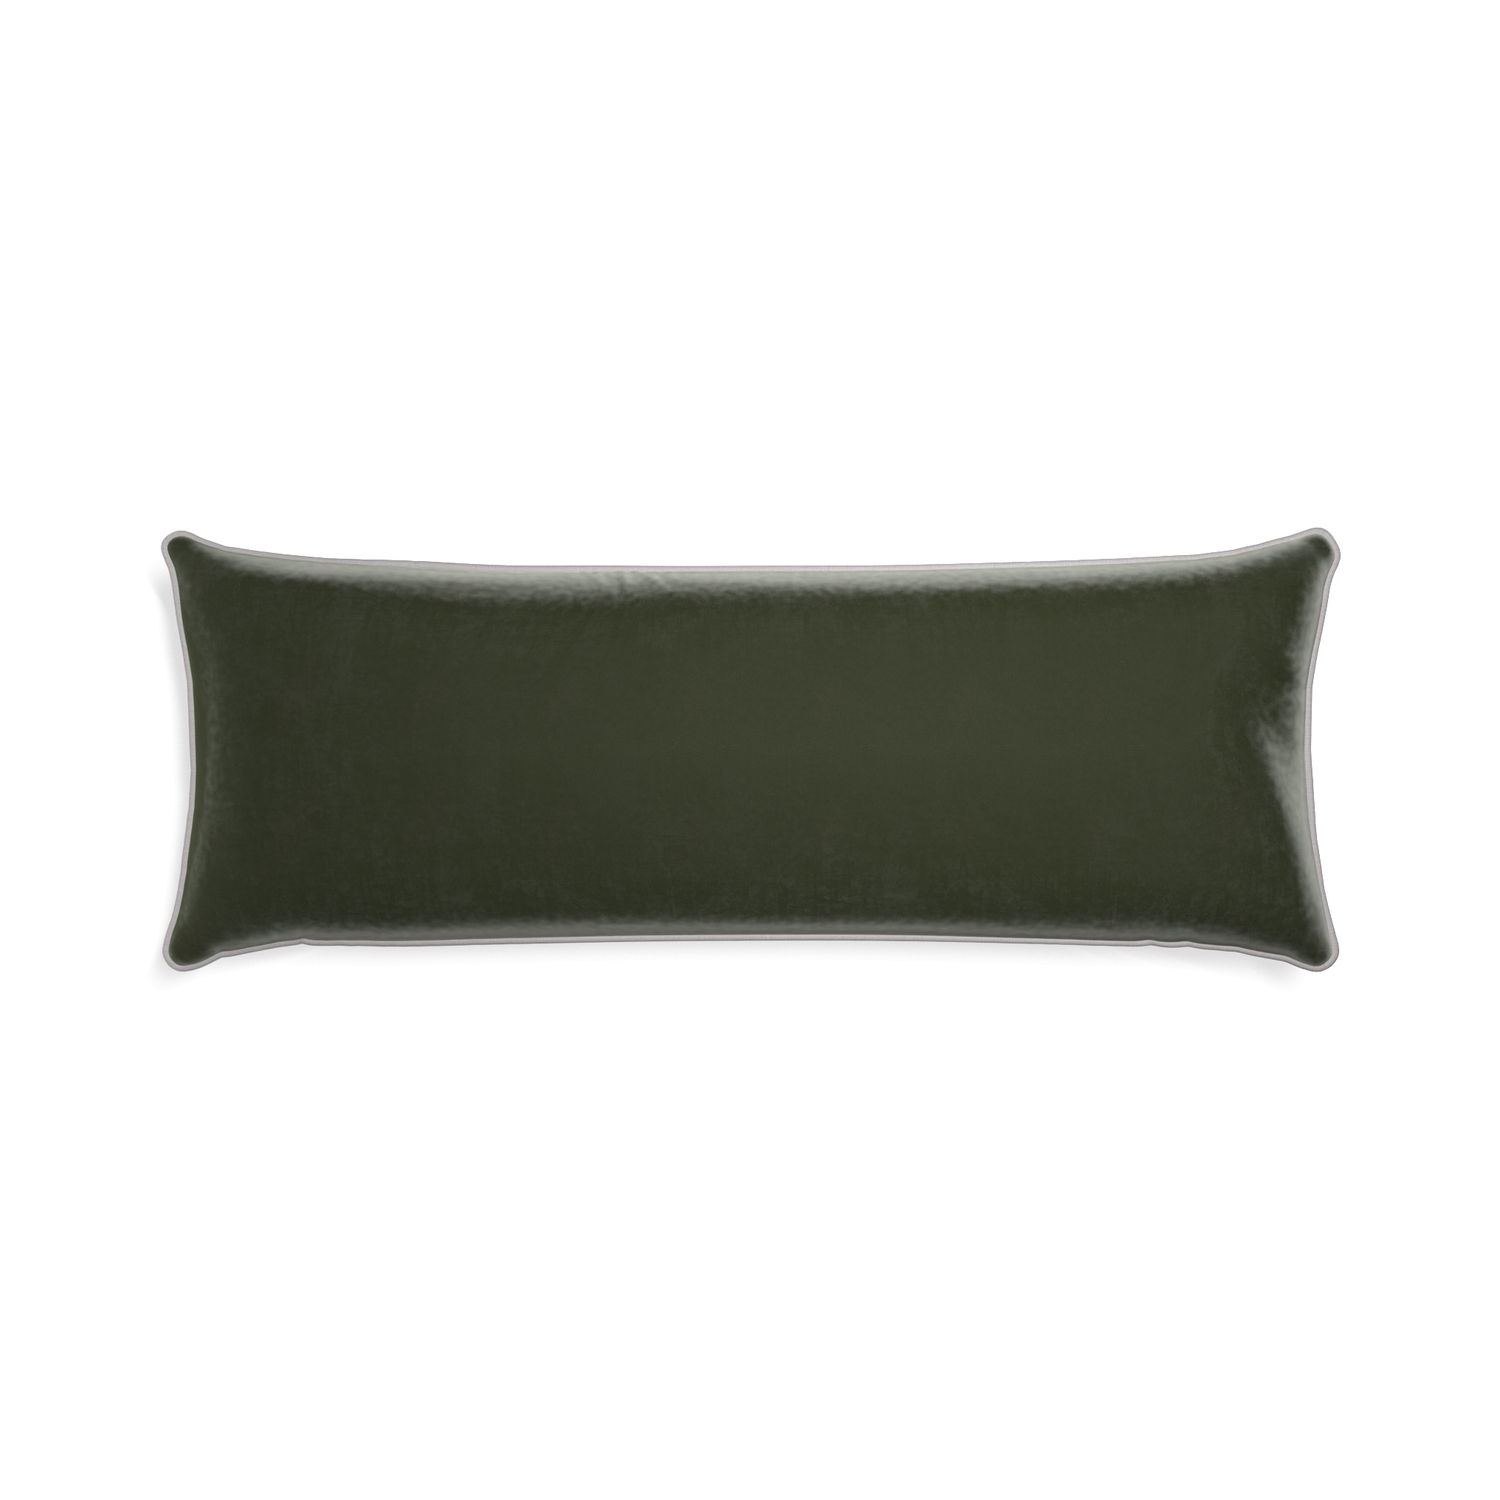 Xl-lumbar fern velvet custom pillow with pebble piping on white background